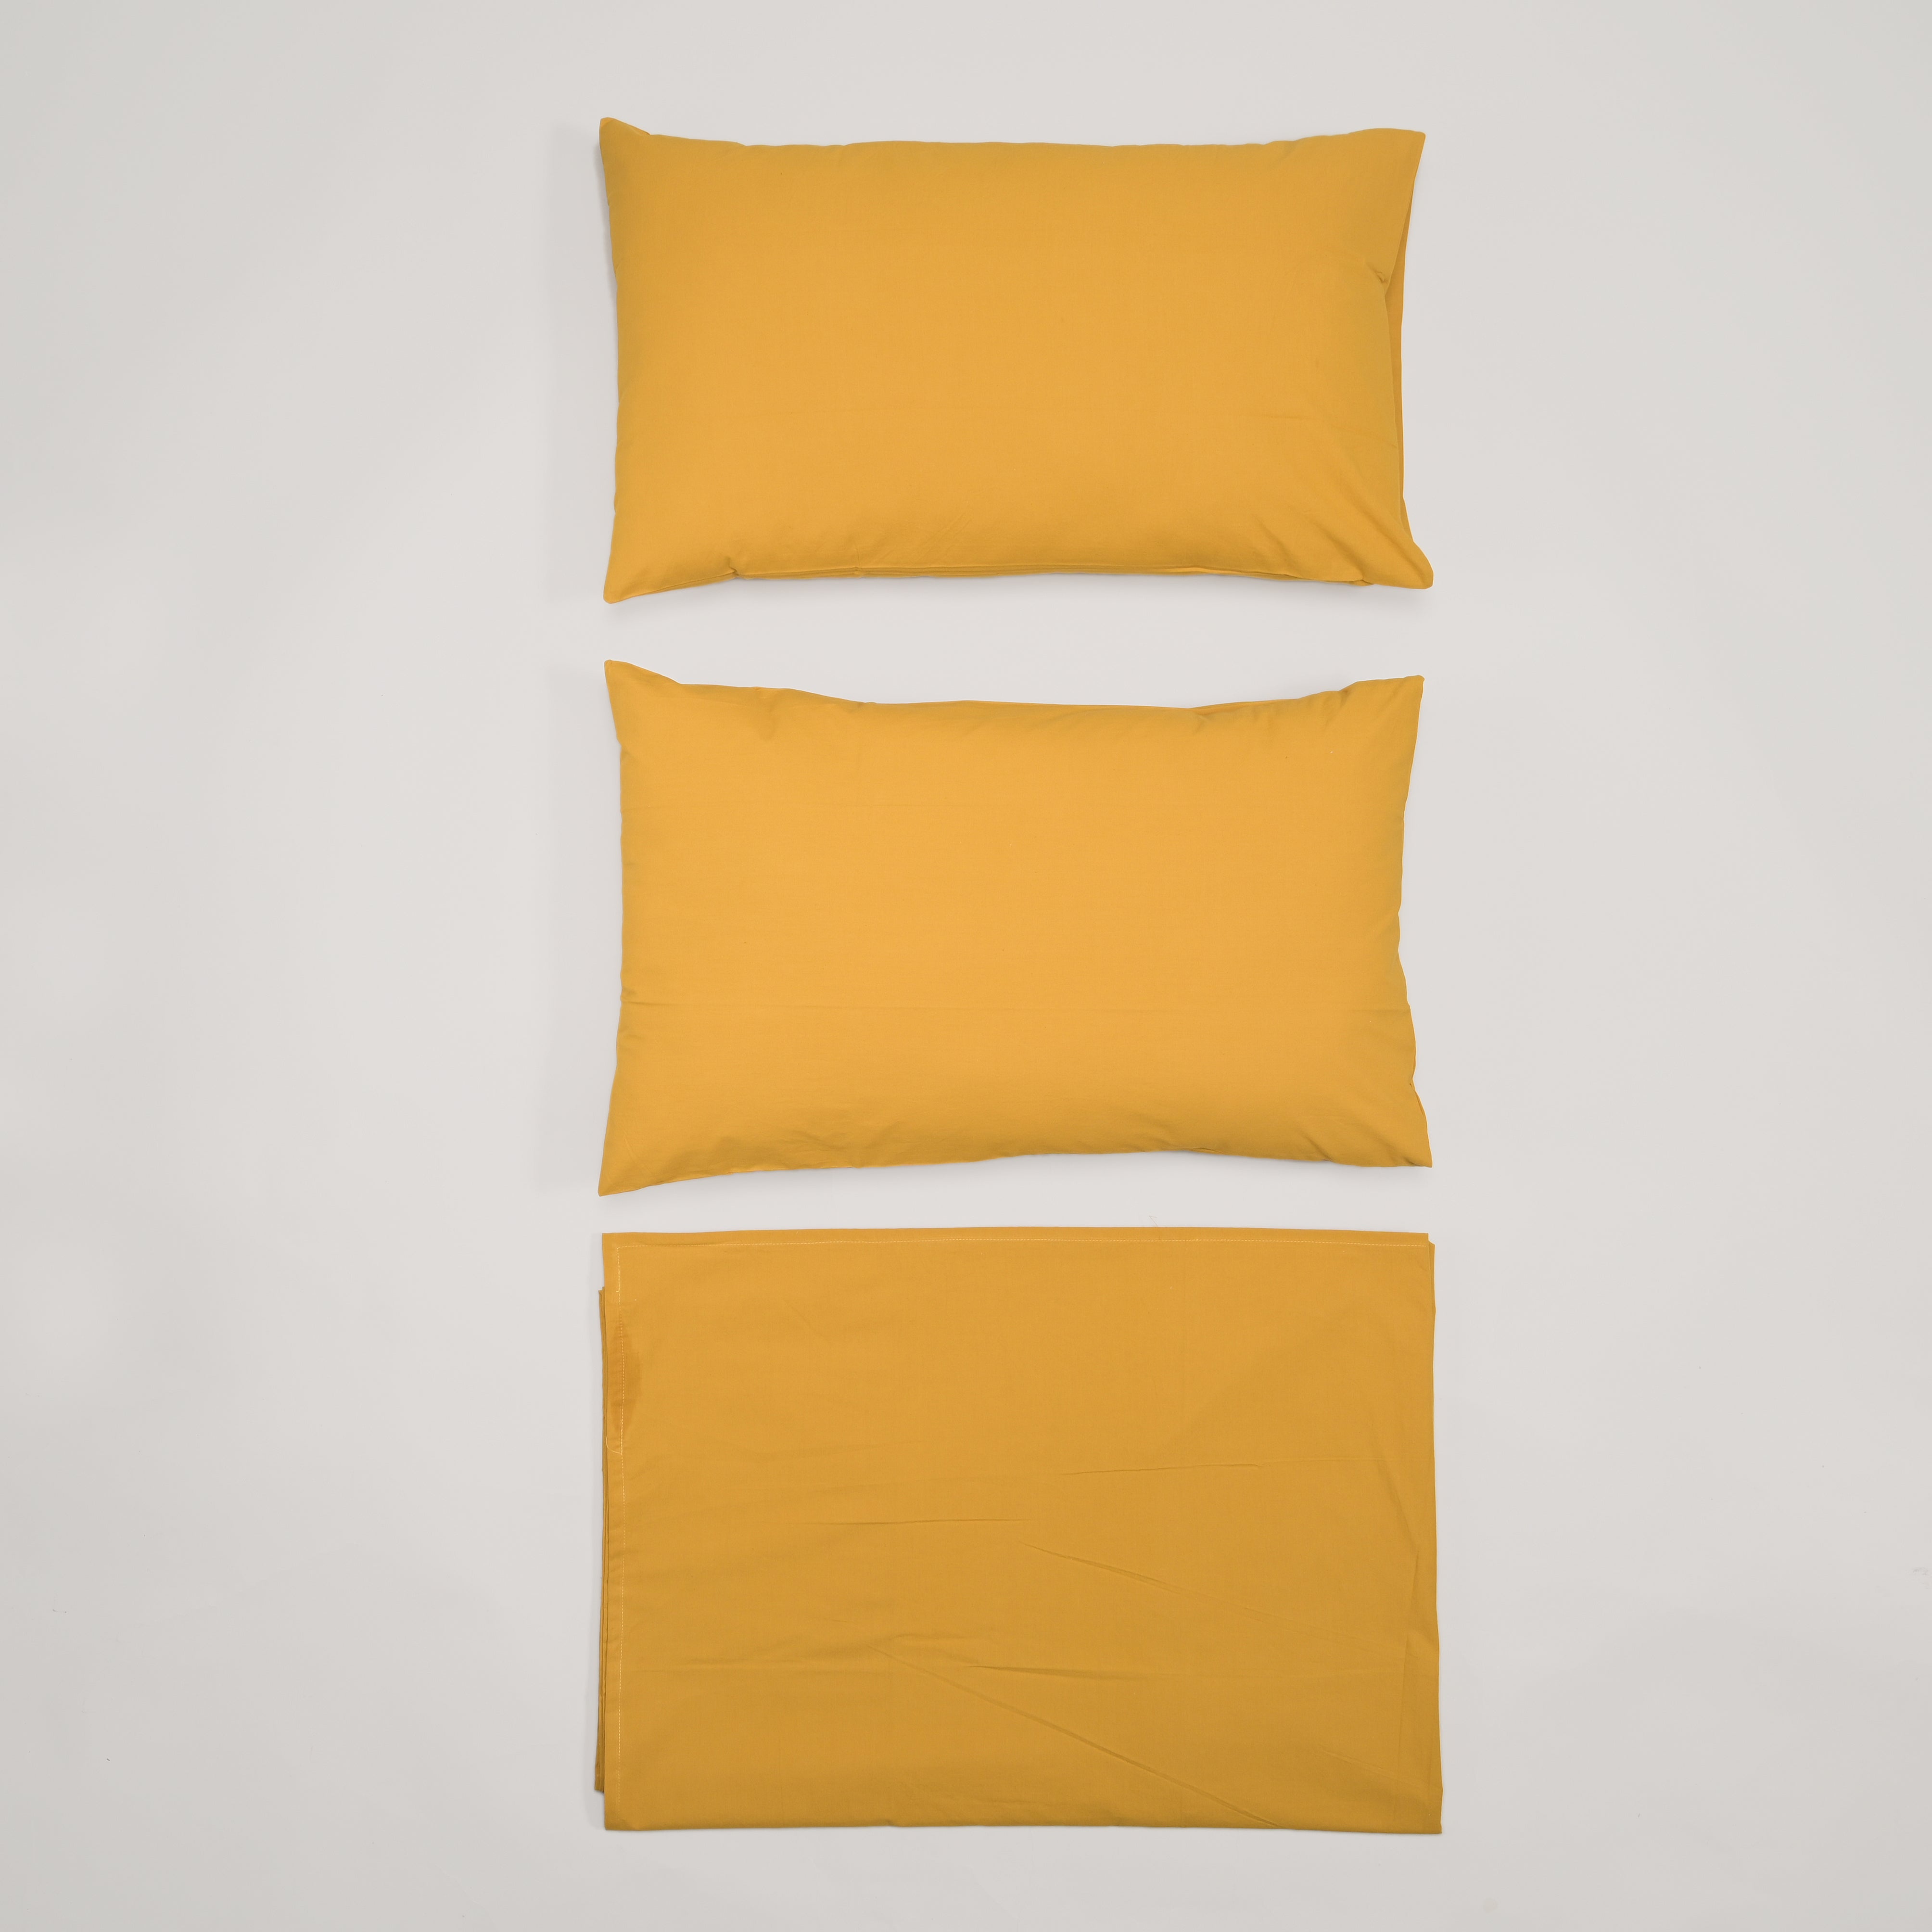 Tangerine Solid Bed Sheet